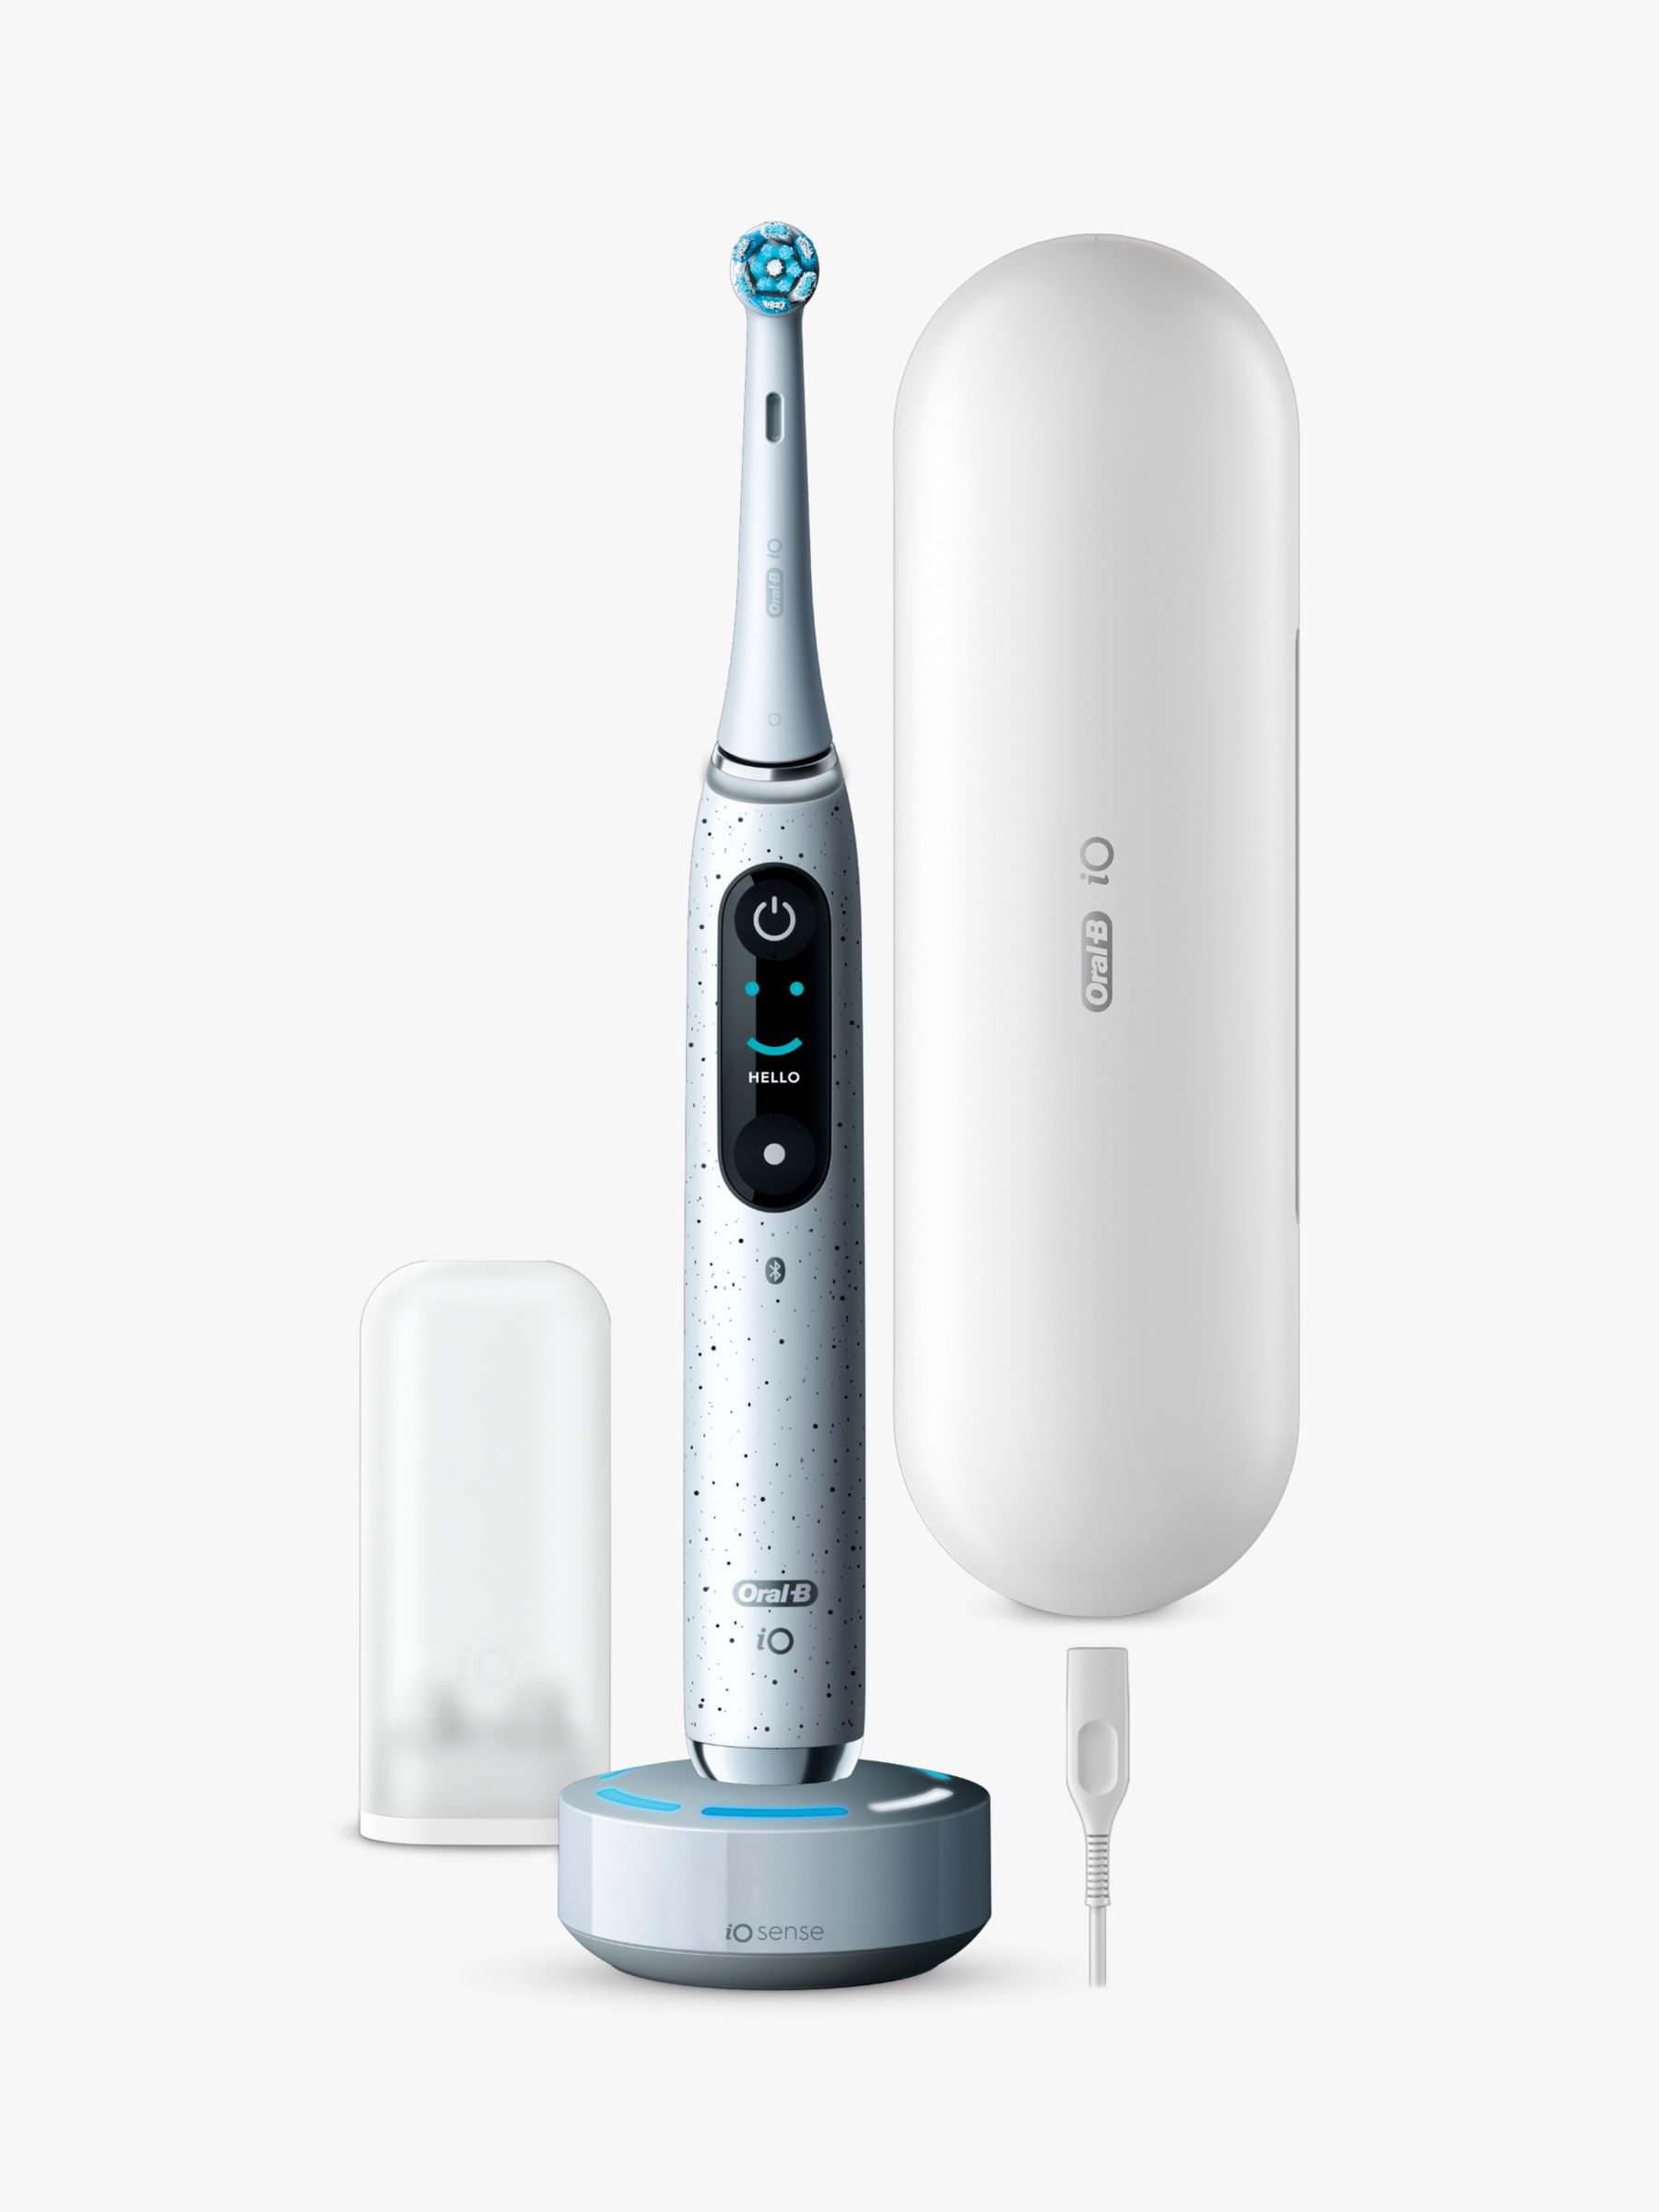 Oral-B iO10 Electric Toothbrush, White